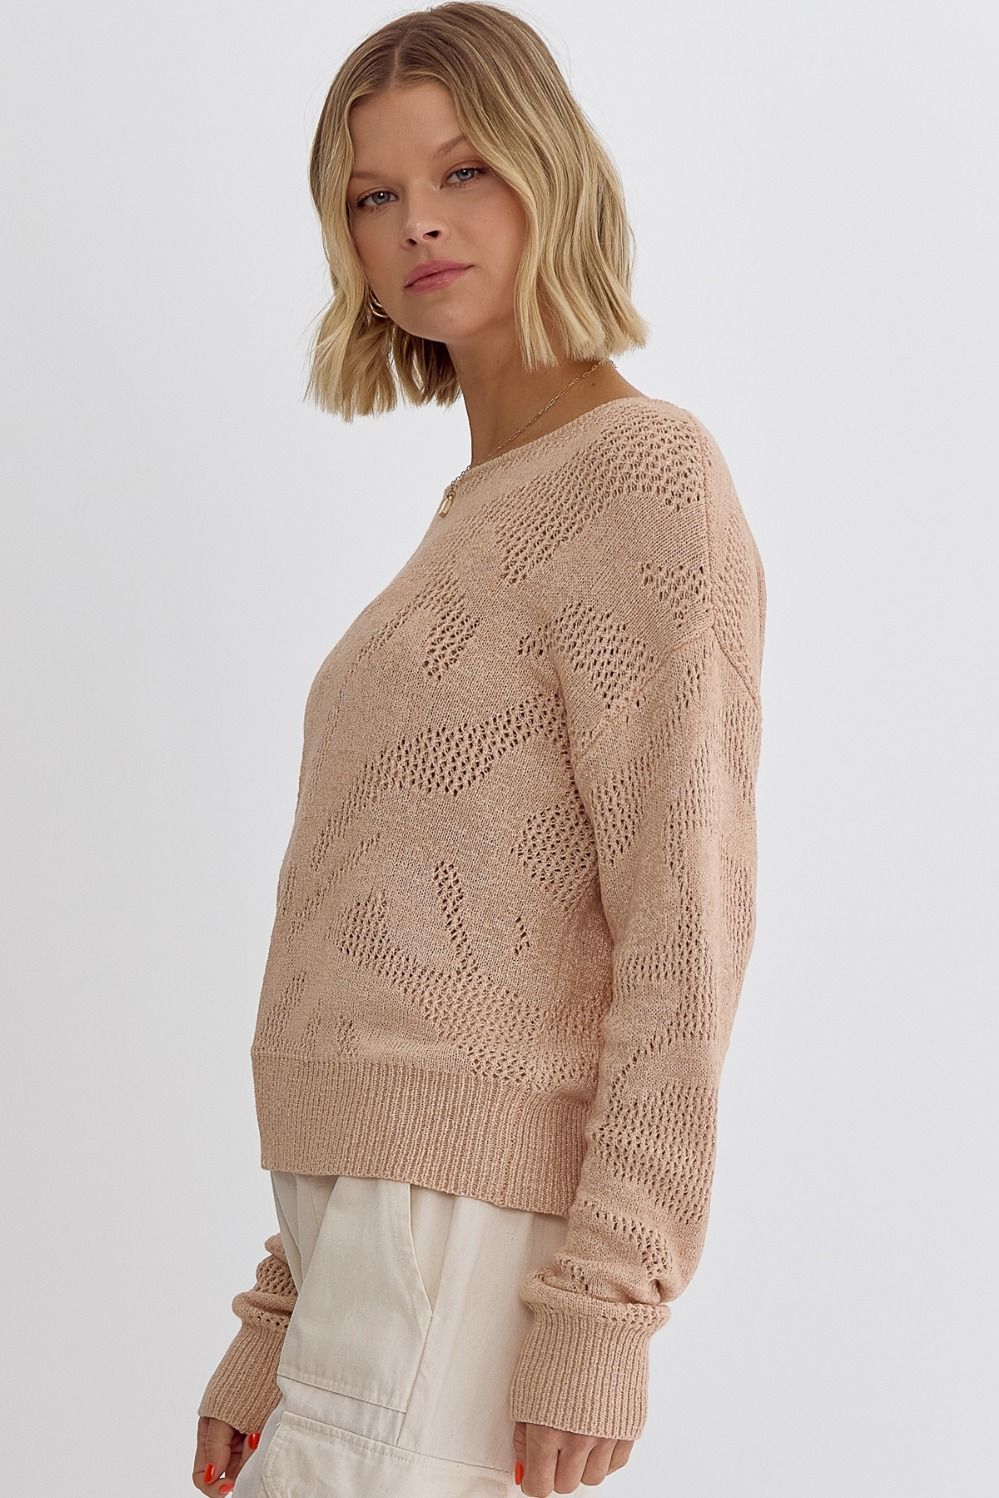 Willow Crochet Sweater